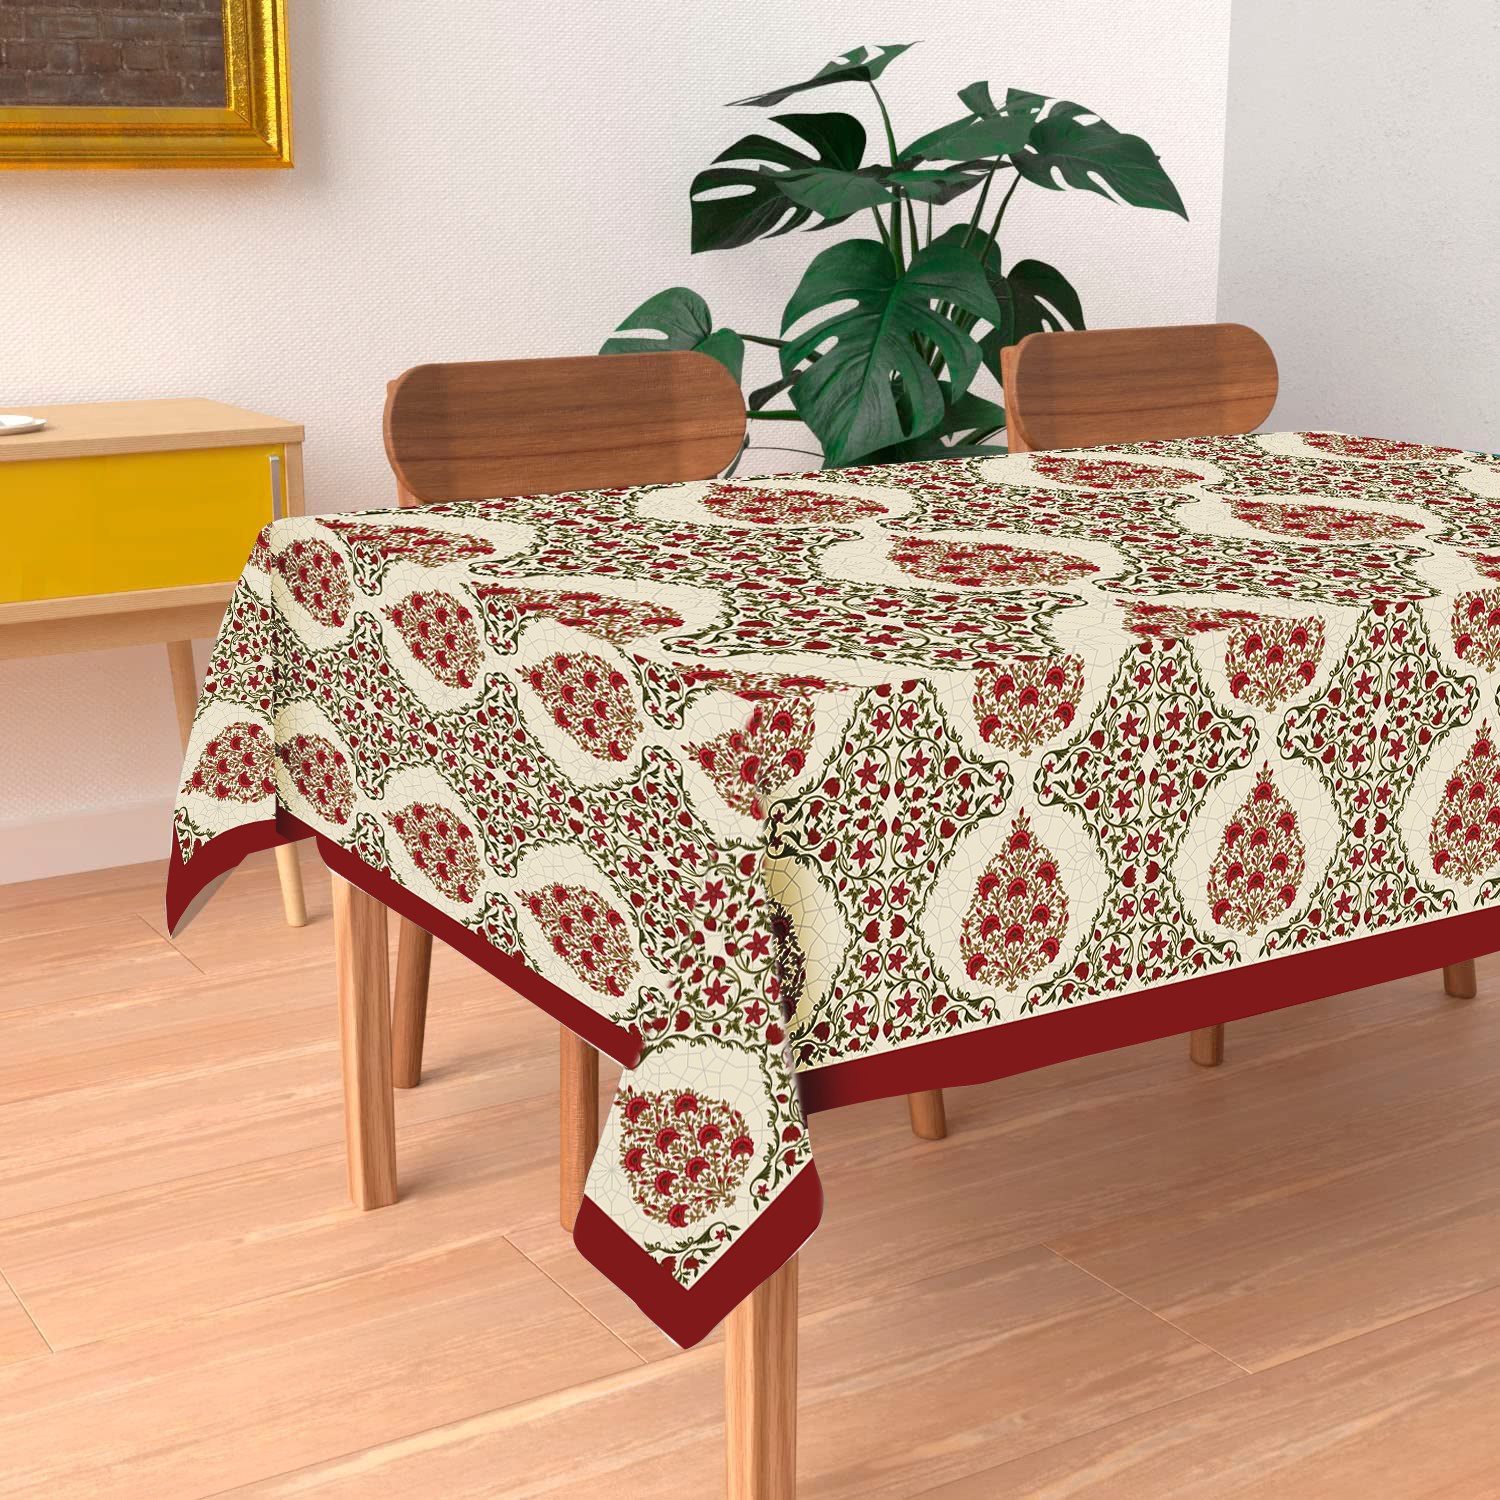 Homewards Ornate leaf Table cover 137×229 cm